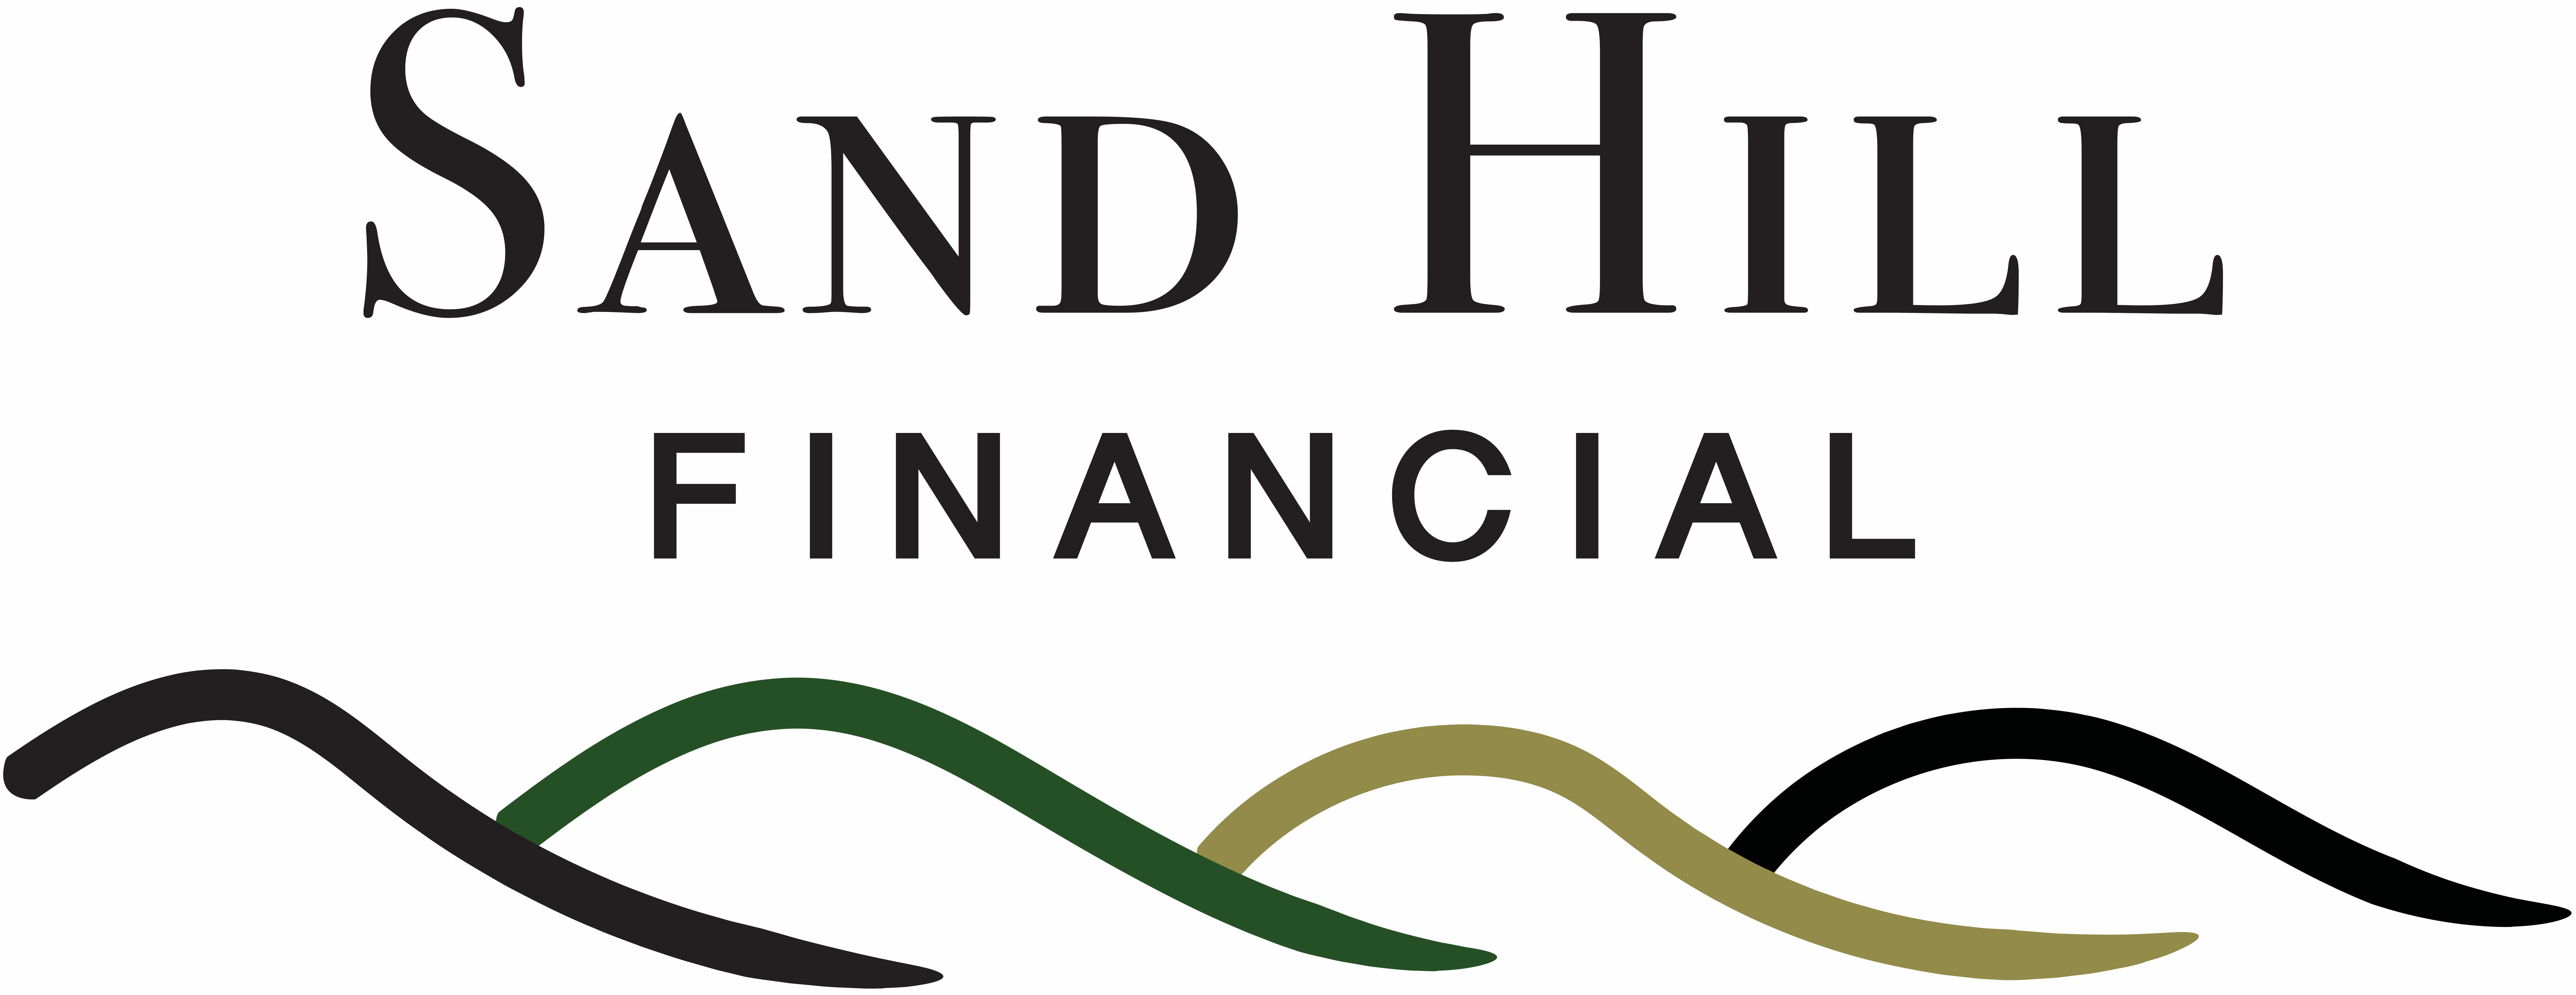 Sandhill Financial logo